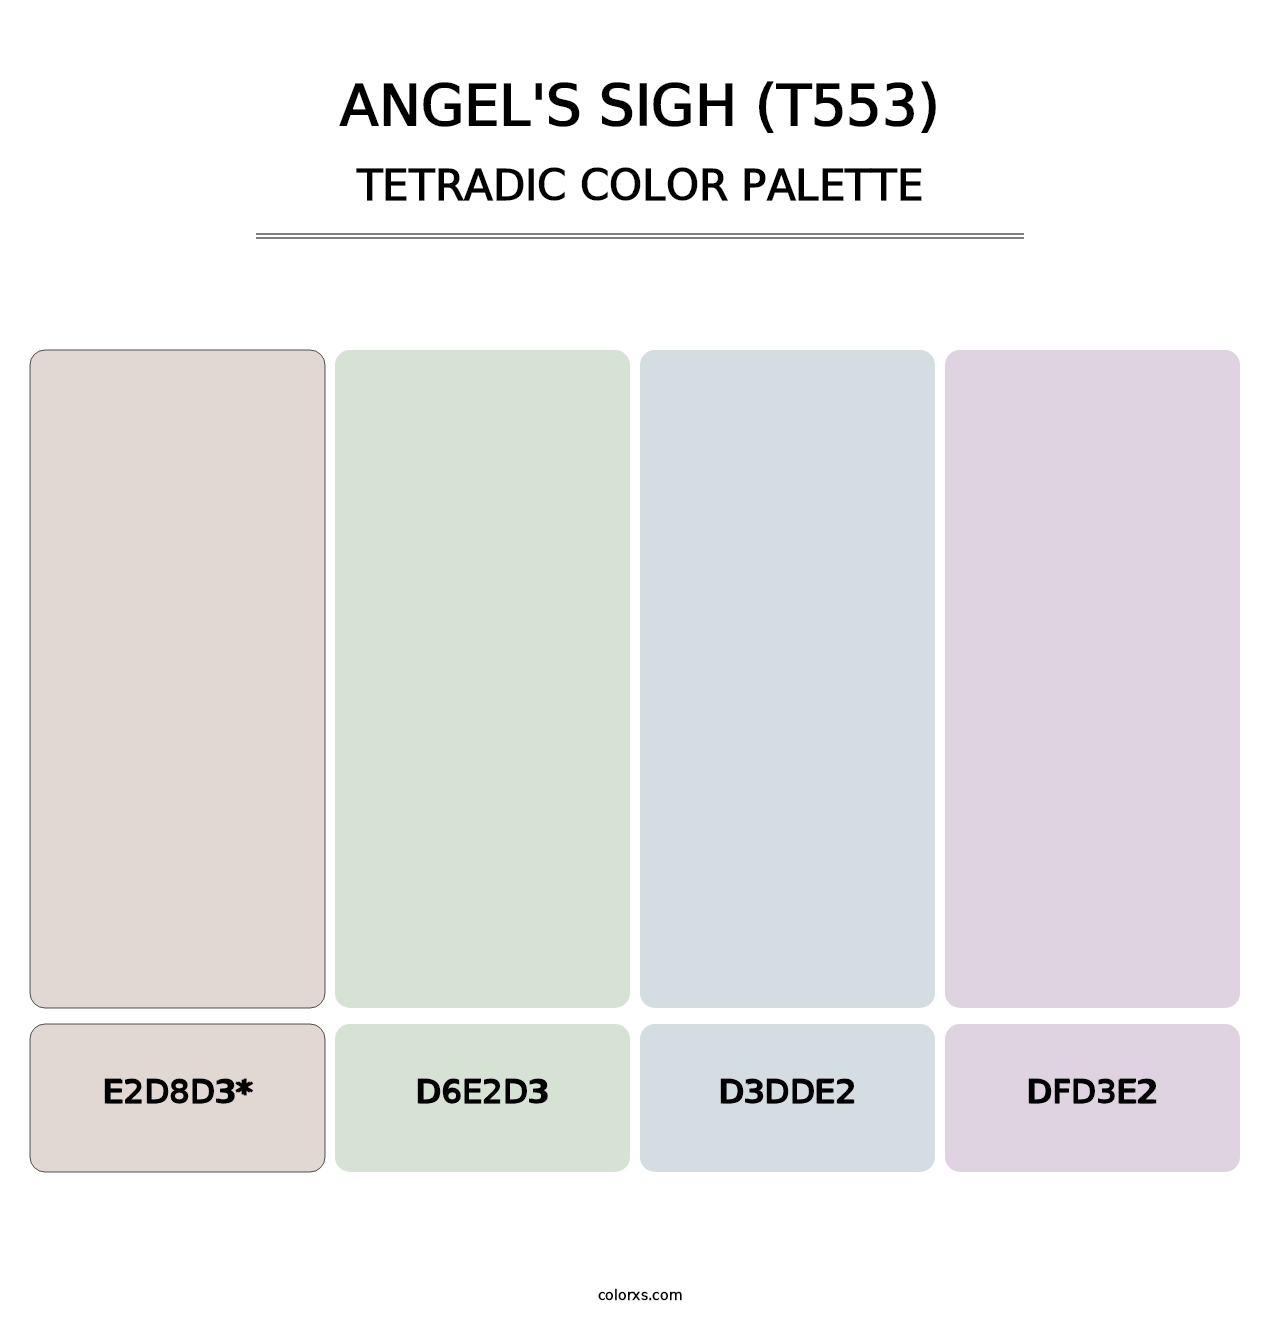 Angel's Sigh (T553) - Tetradic Color Palette